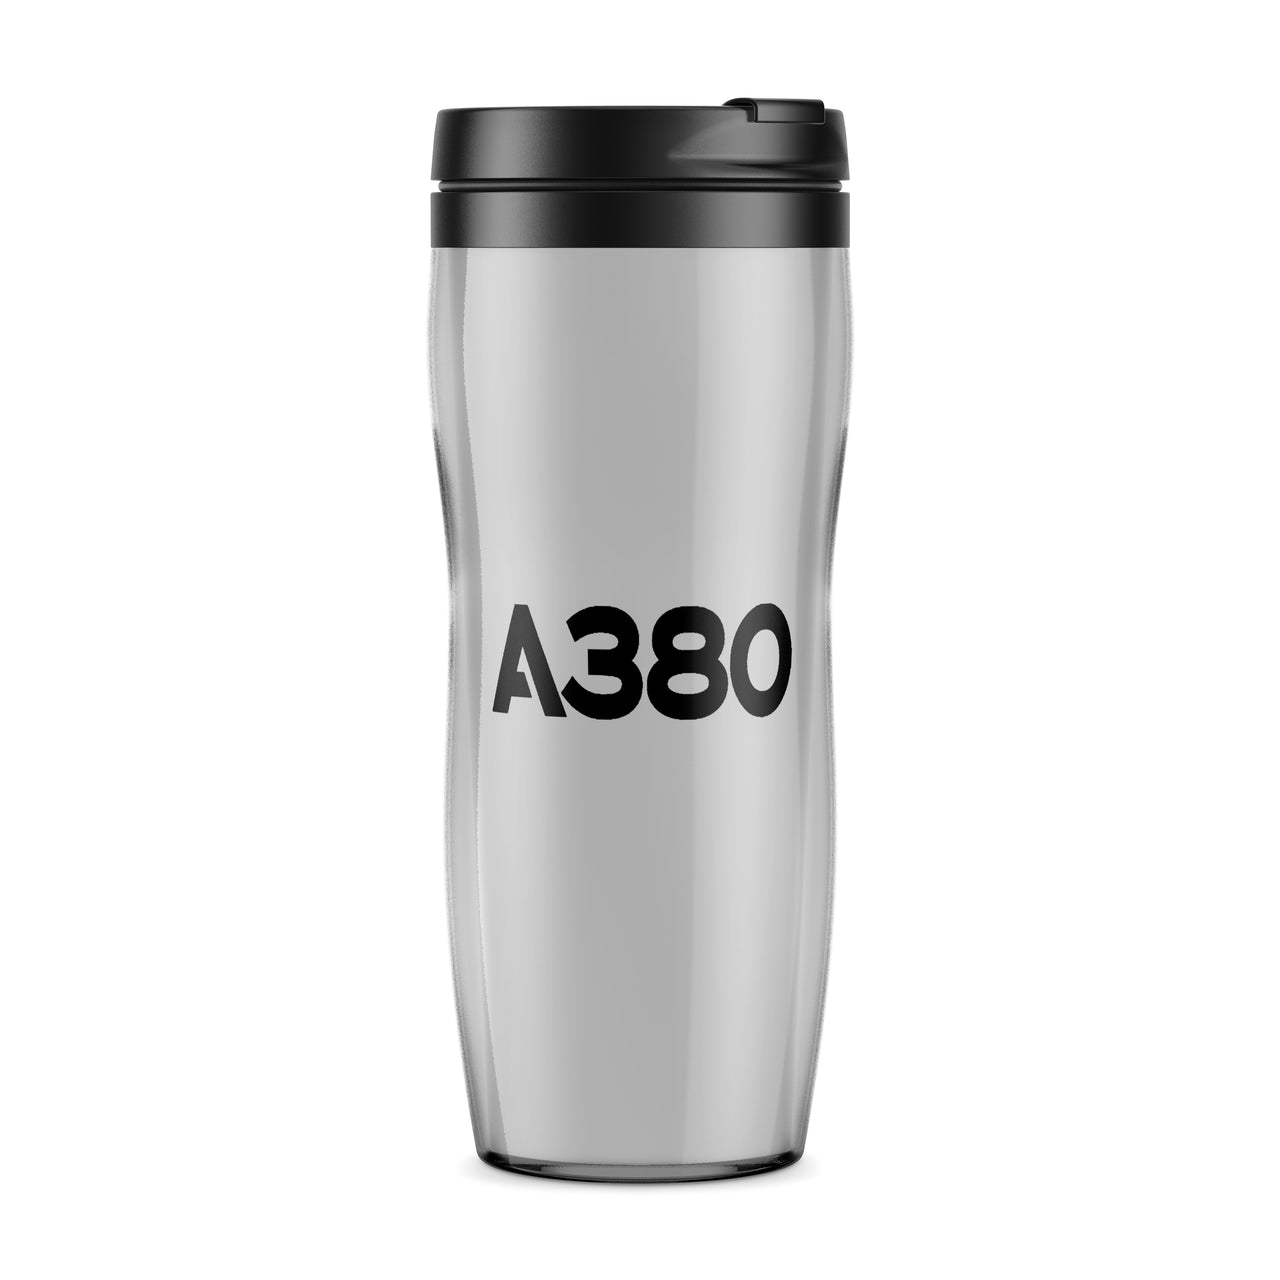 A380 Flat Text Designed Travel Mugs